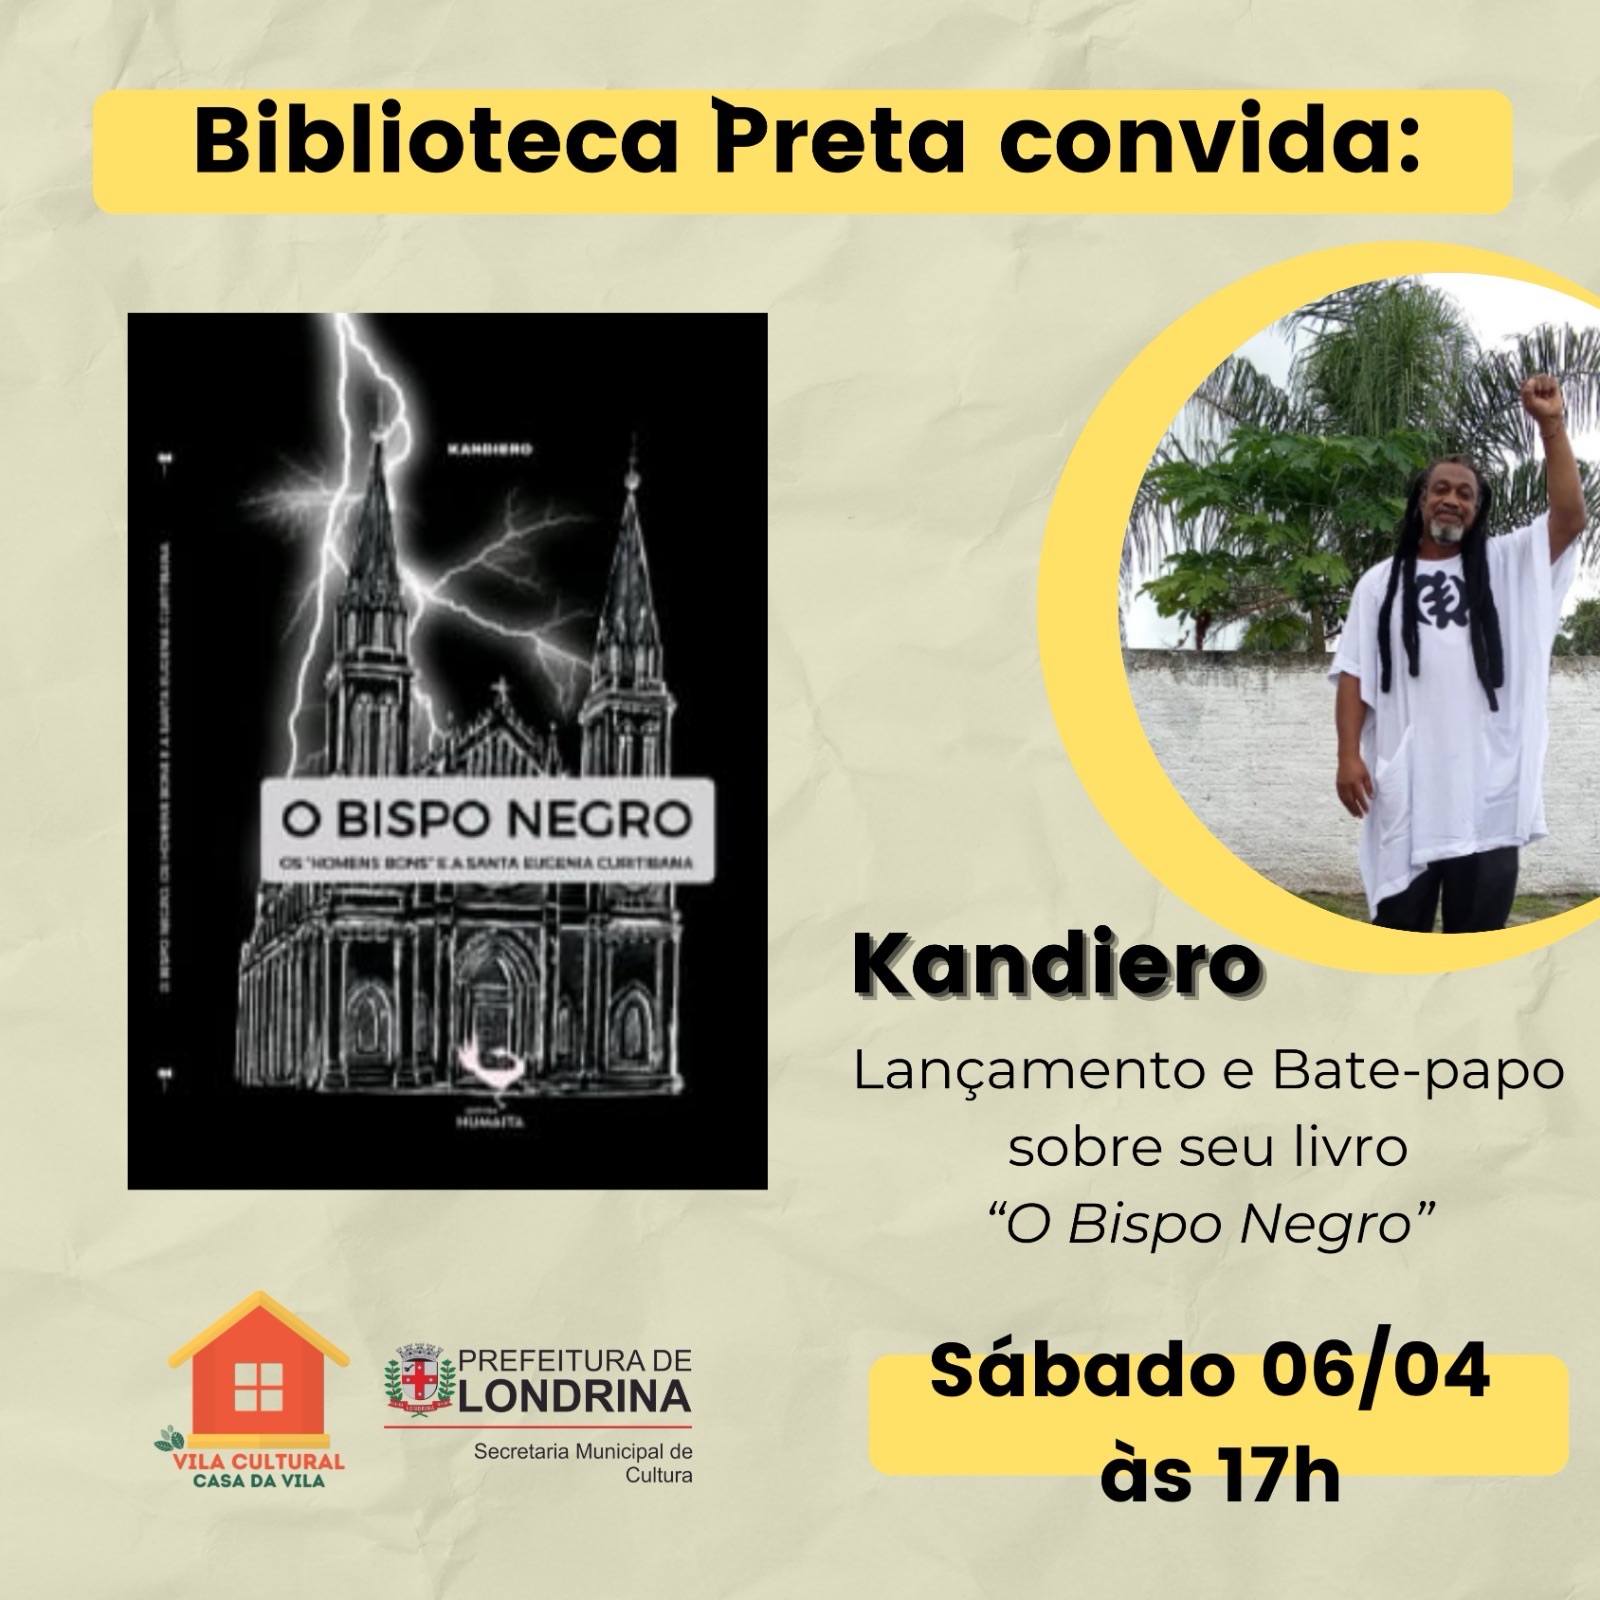 Neste sábado: Kandiero lança ‘O Bispo Negro’ na Biblioteca Preta em Londrina